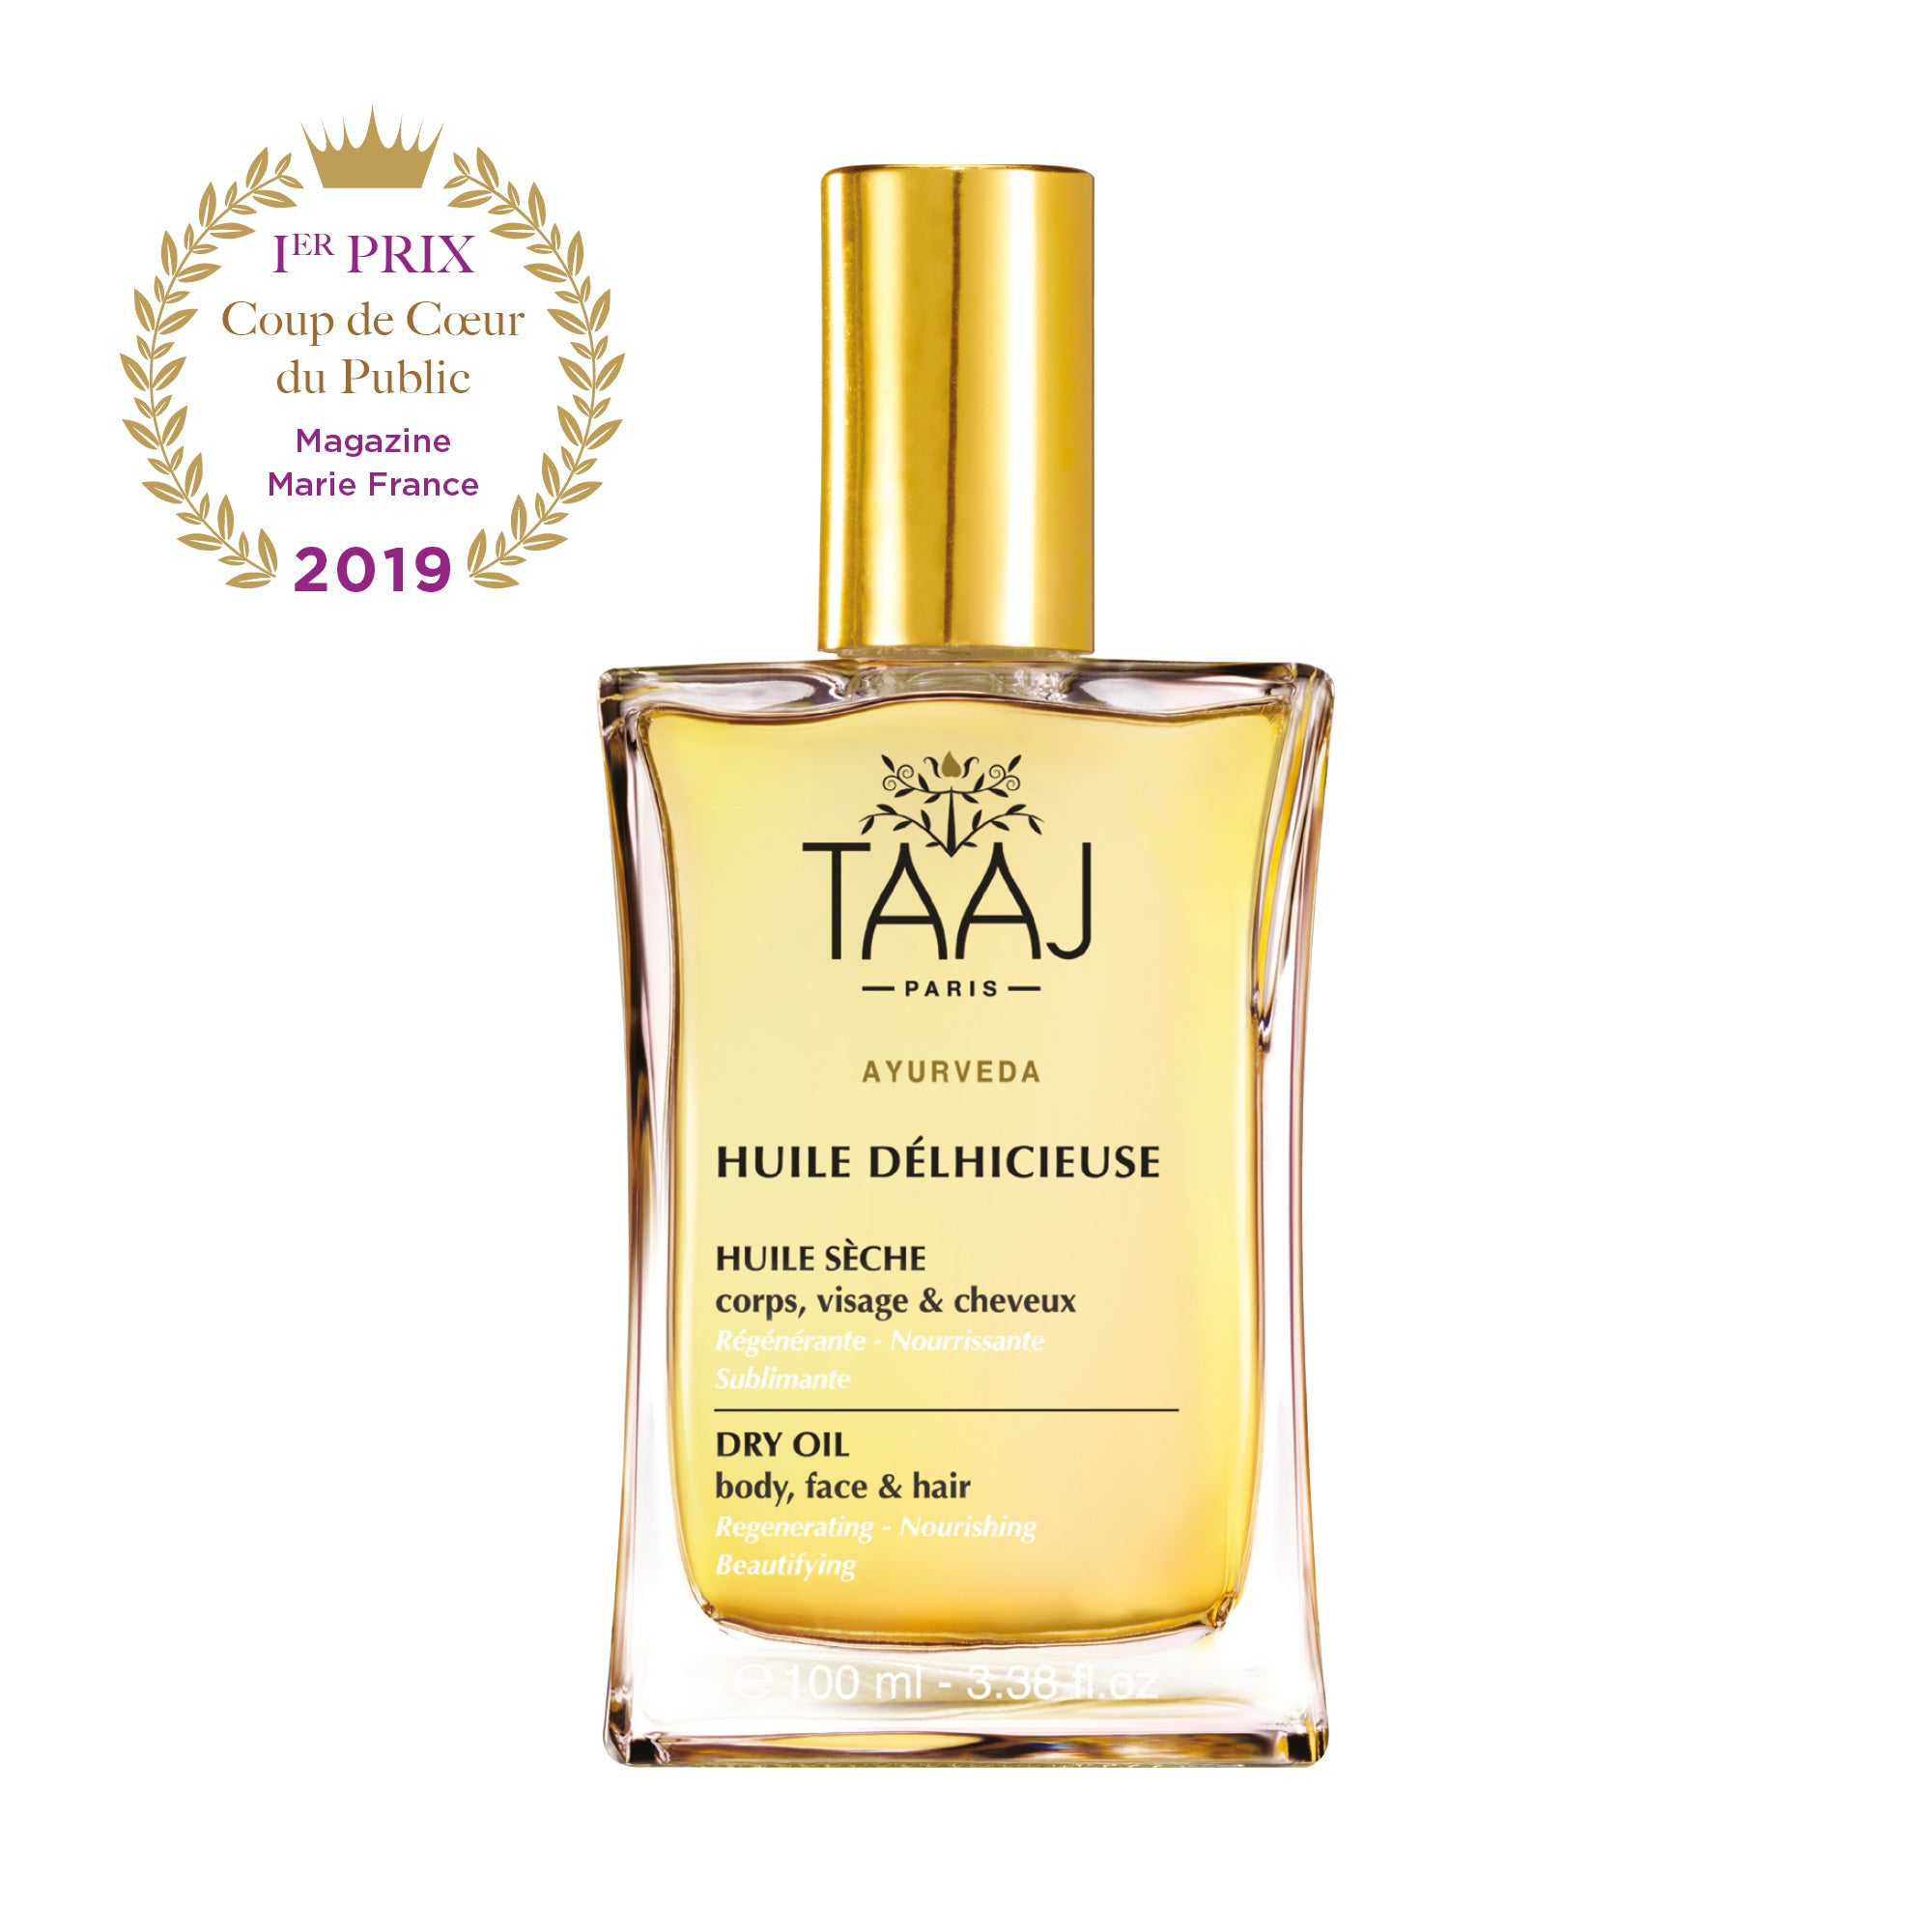 TAAJ Paris - Huile Delhicieuse - Face, Body & Hair Dry Oil with addictive scent - 3,34 fl oz